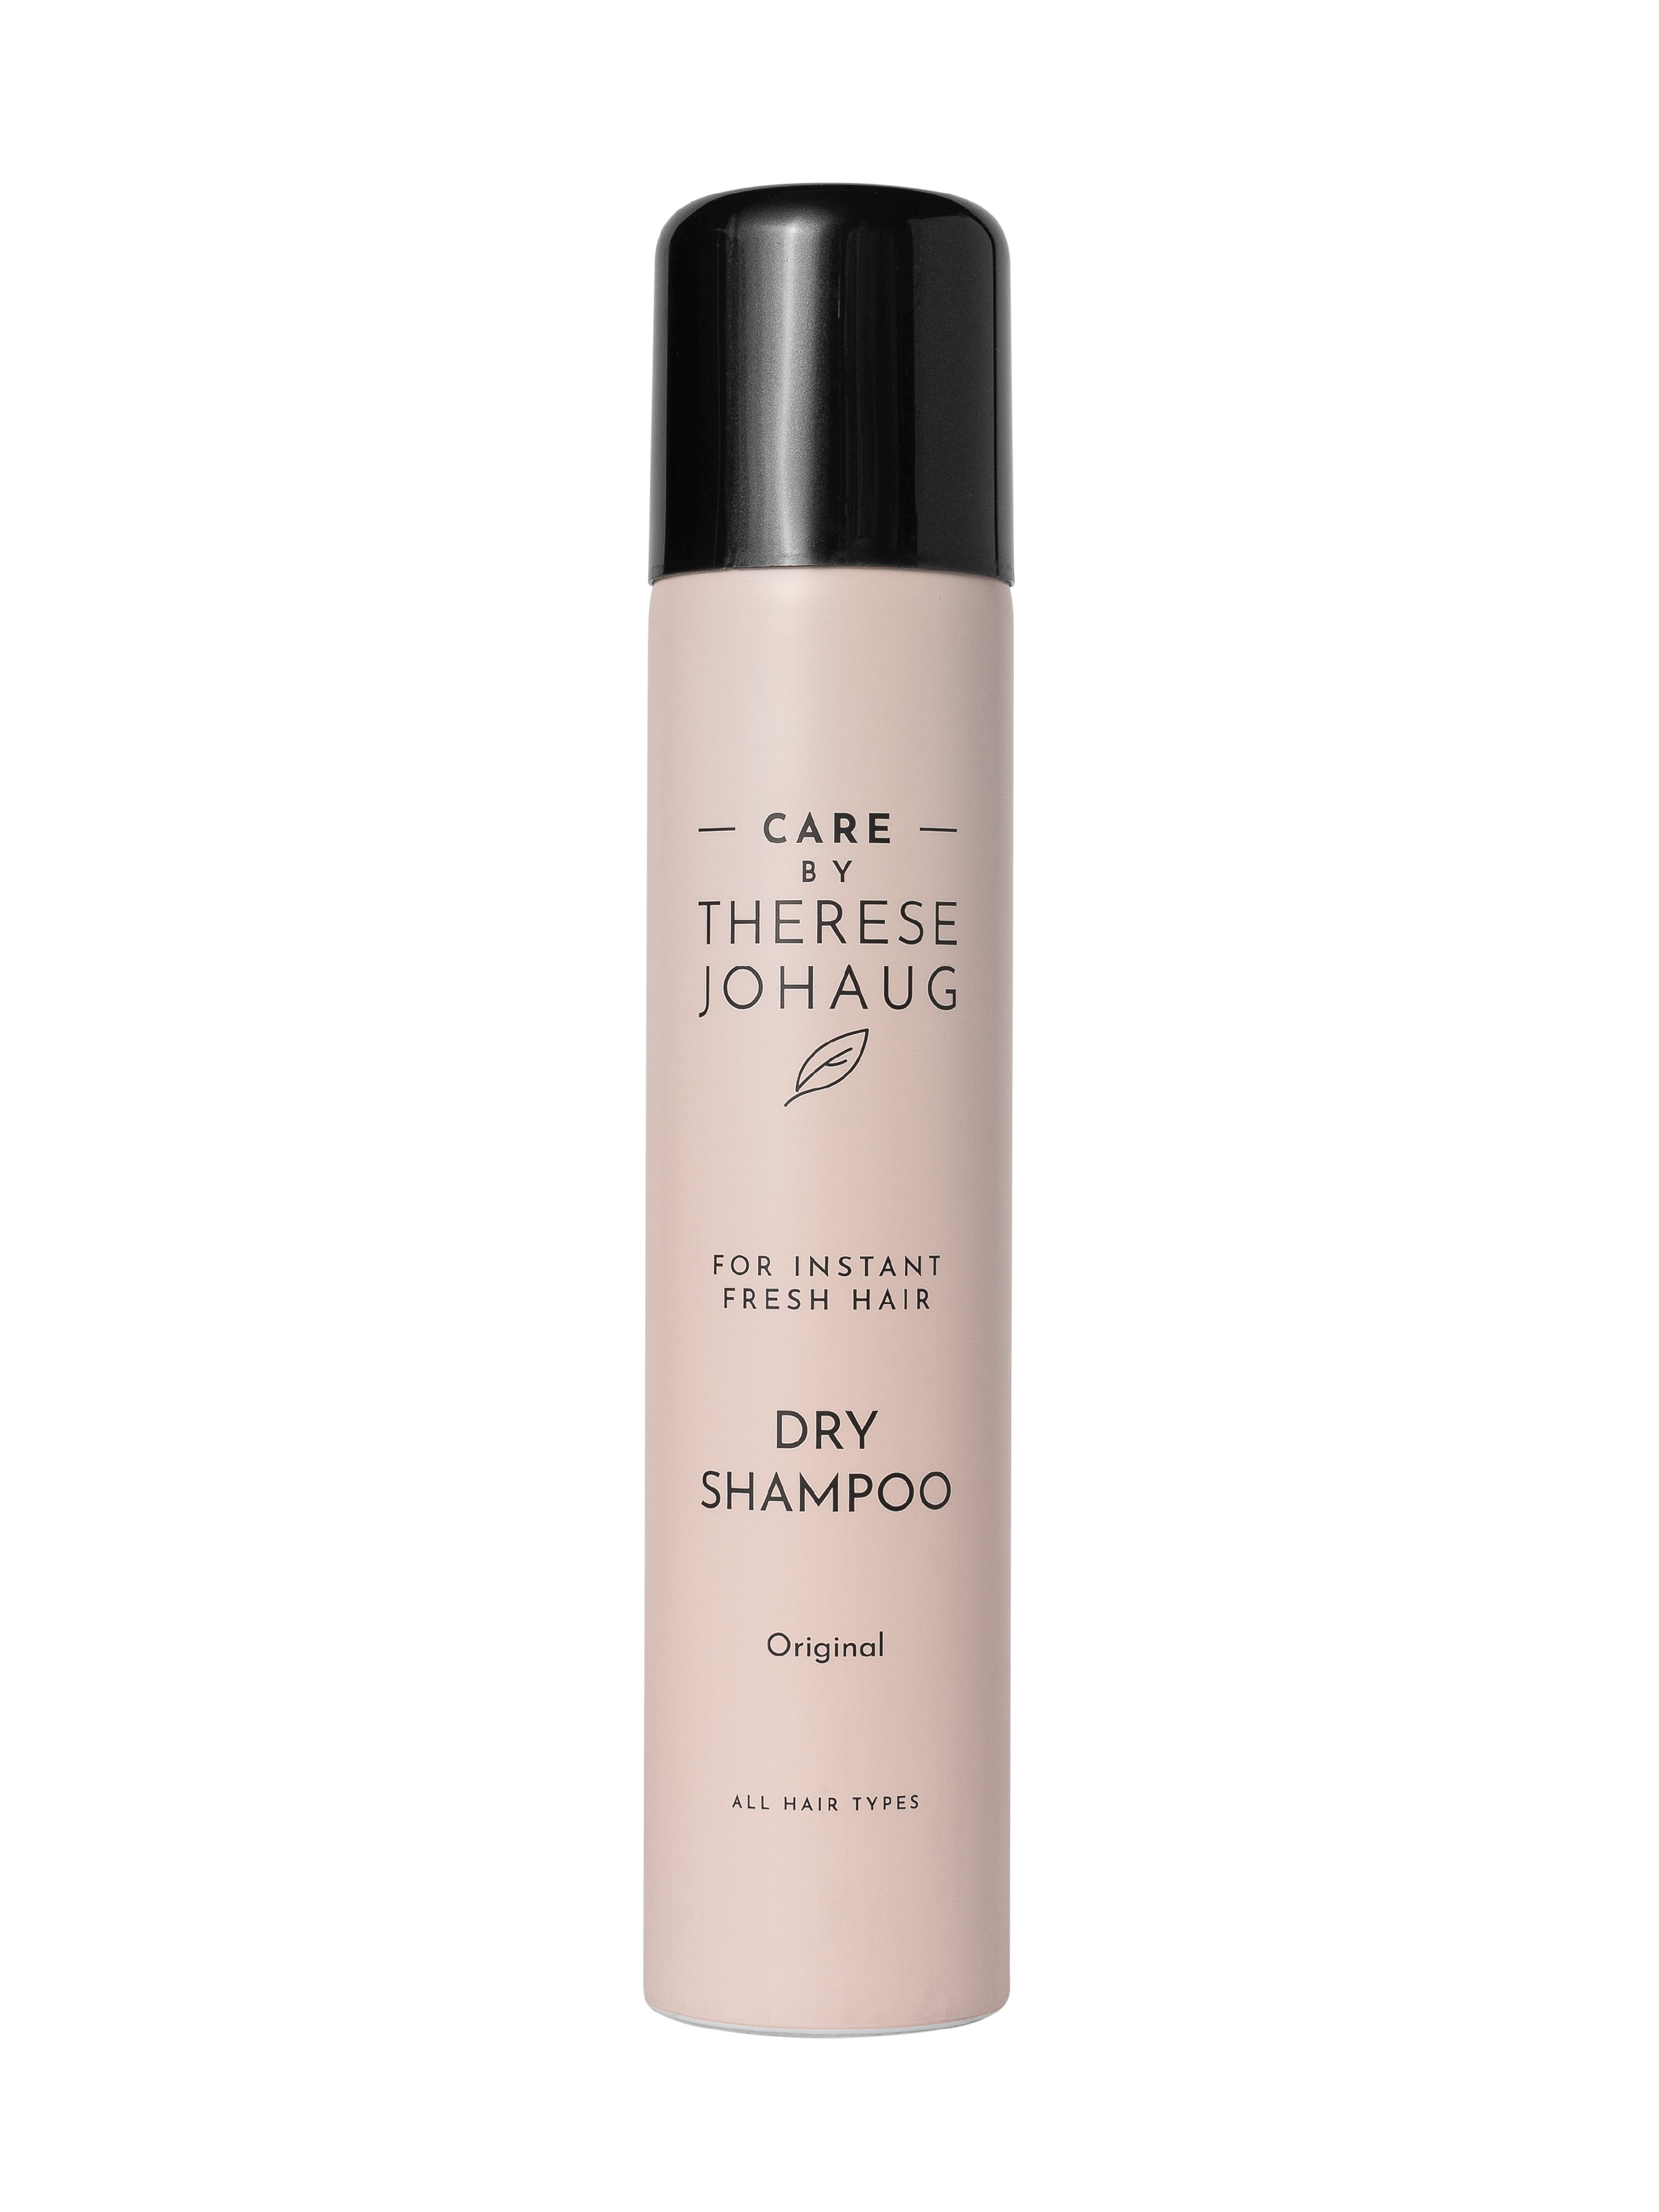 Care by Therese Johaug Dry Shampoo, 200 ml